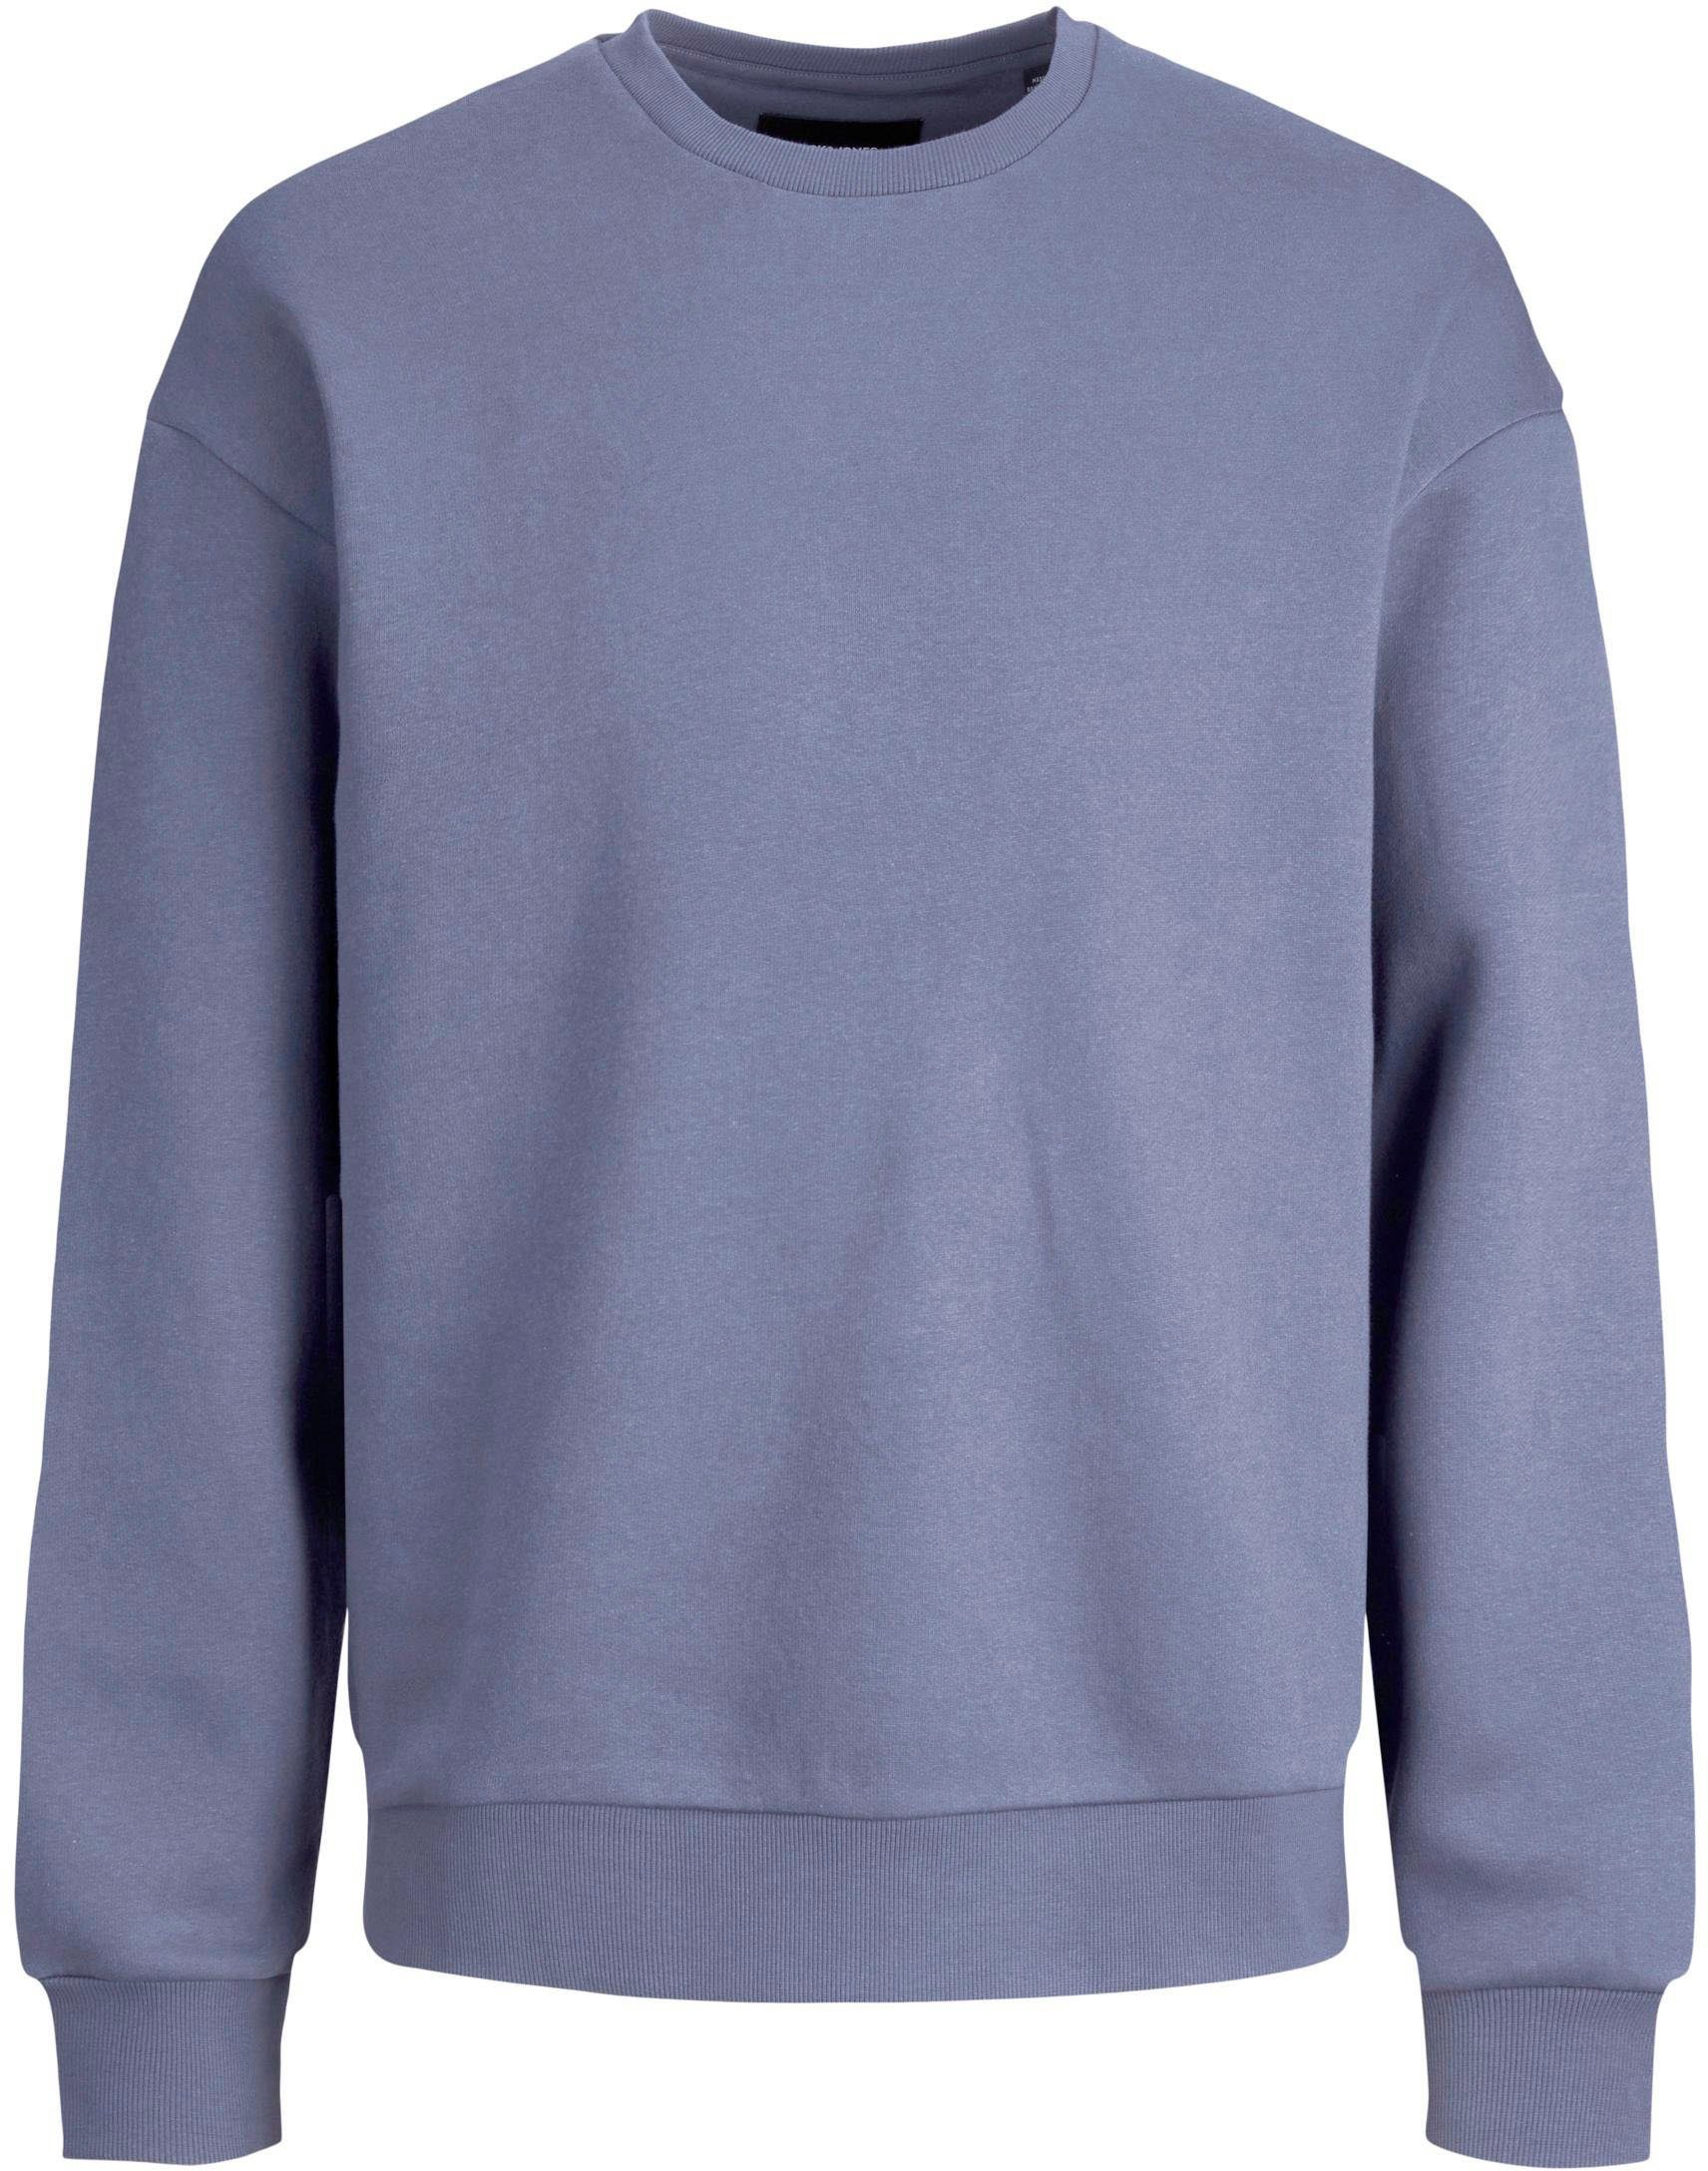 CREW Jones STAR BASIC NECK grisaille Jack SWEAT & Sweatshirt